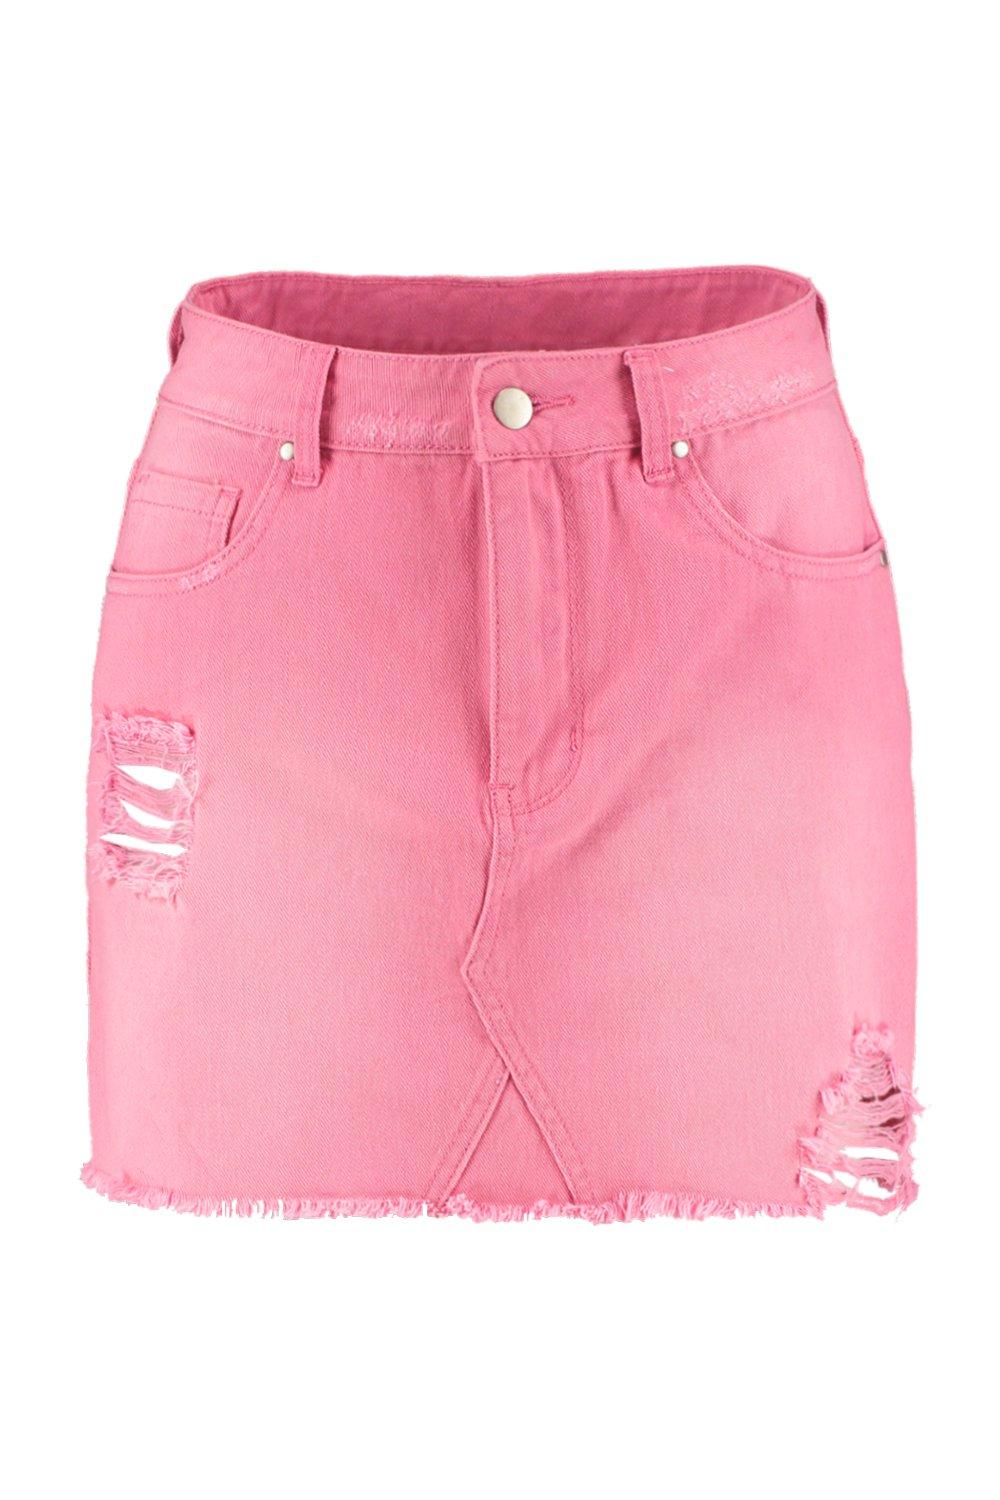 pink ripped denim skirt